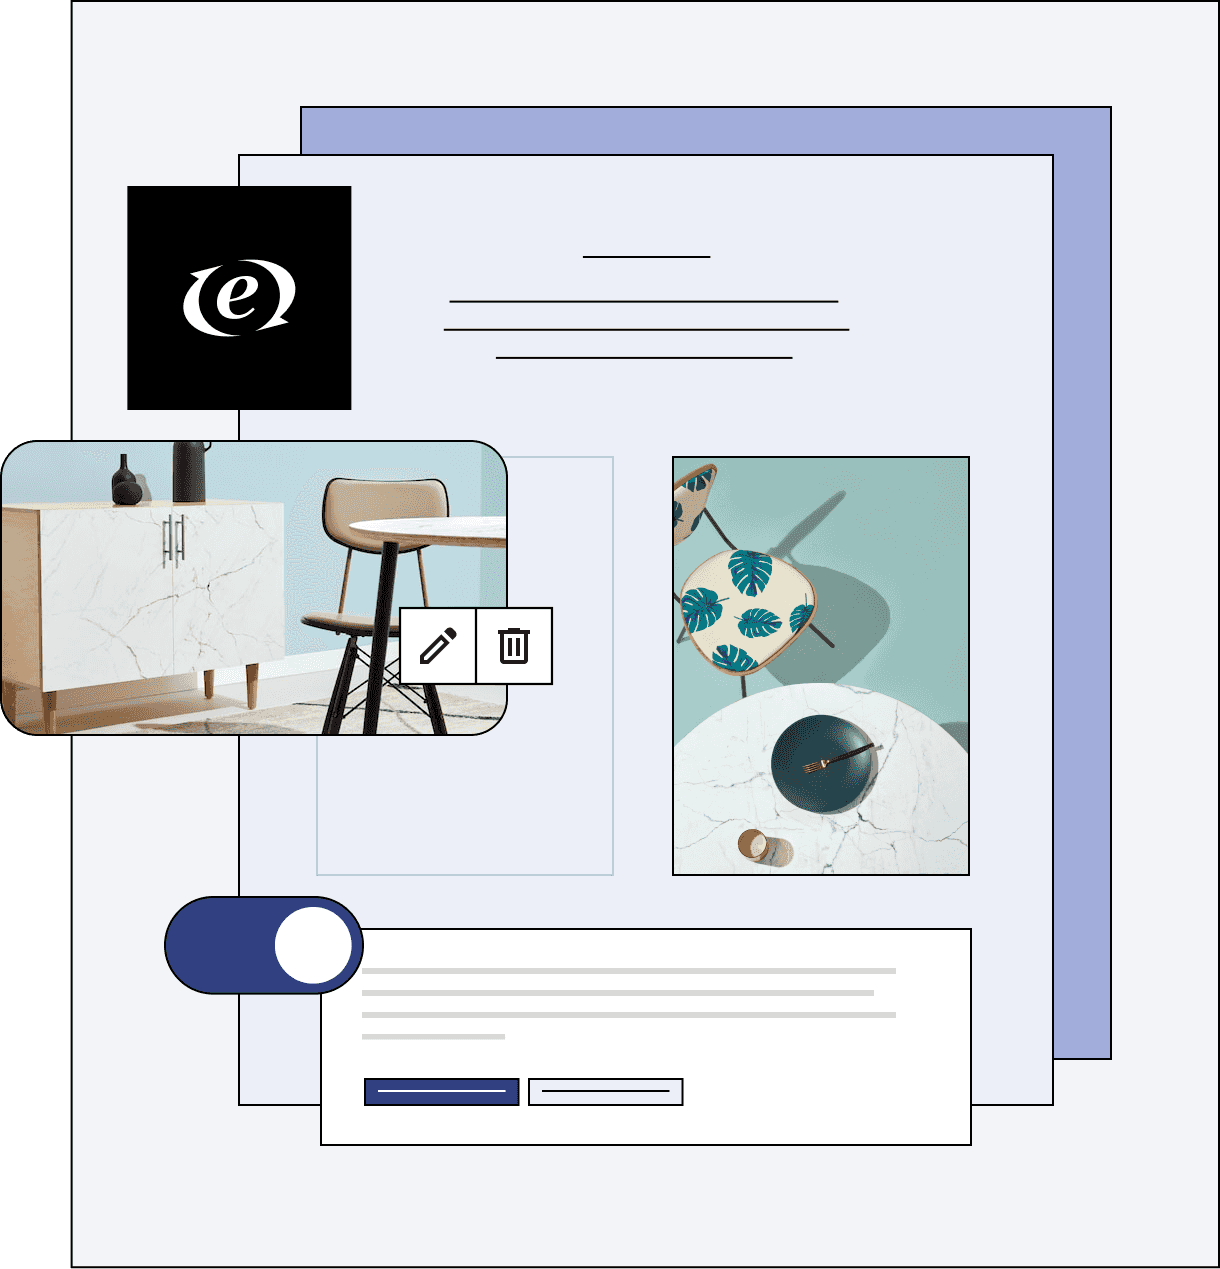 WordPress logo lays atop a freshly designed site by Lorenzo using managed WordPress hosting, he creates furniture